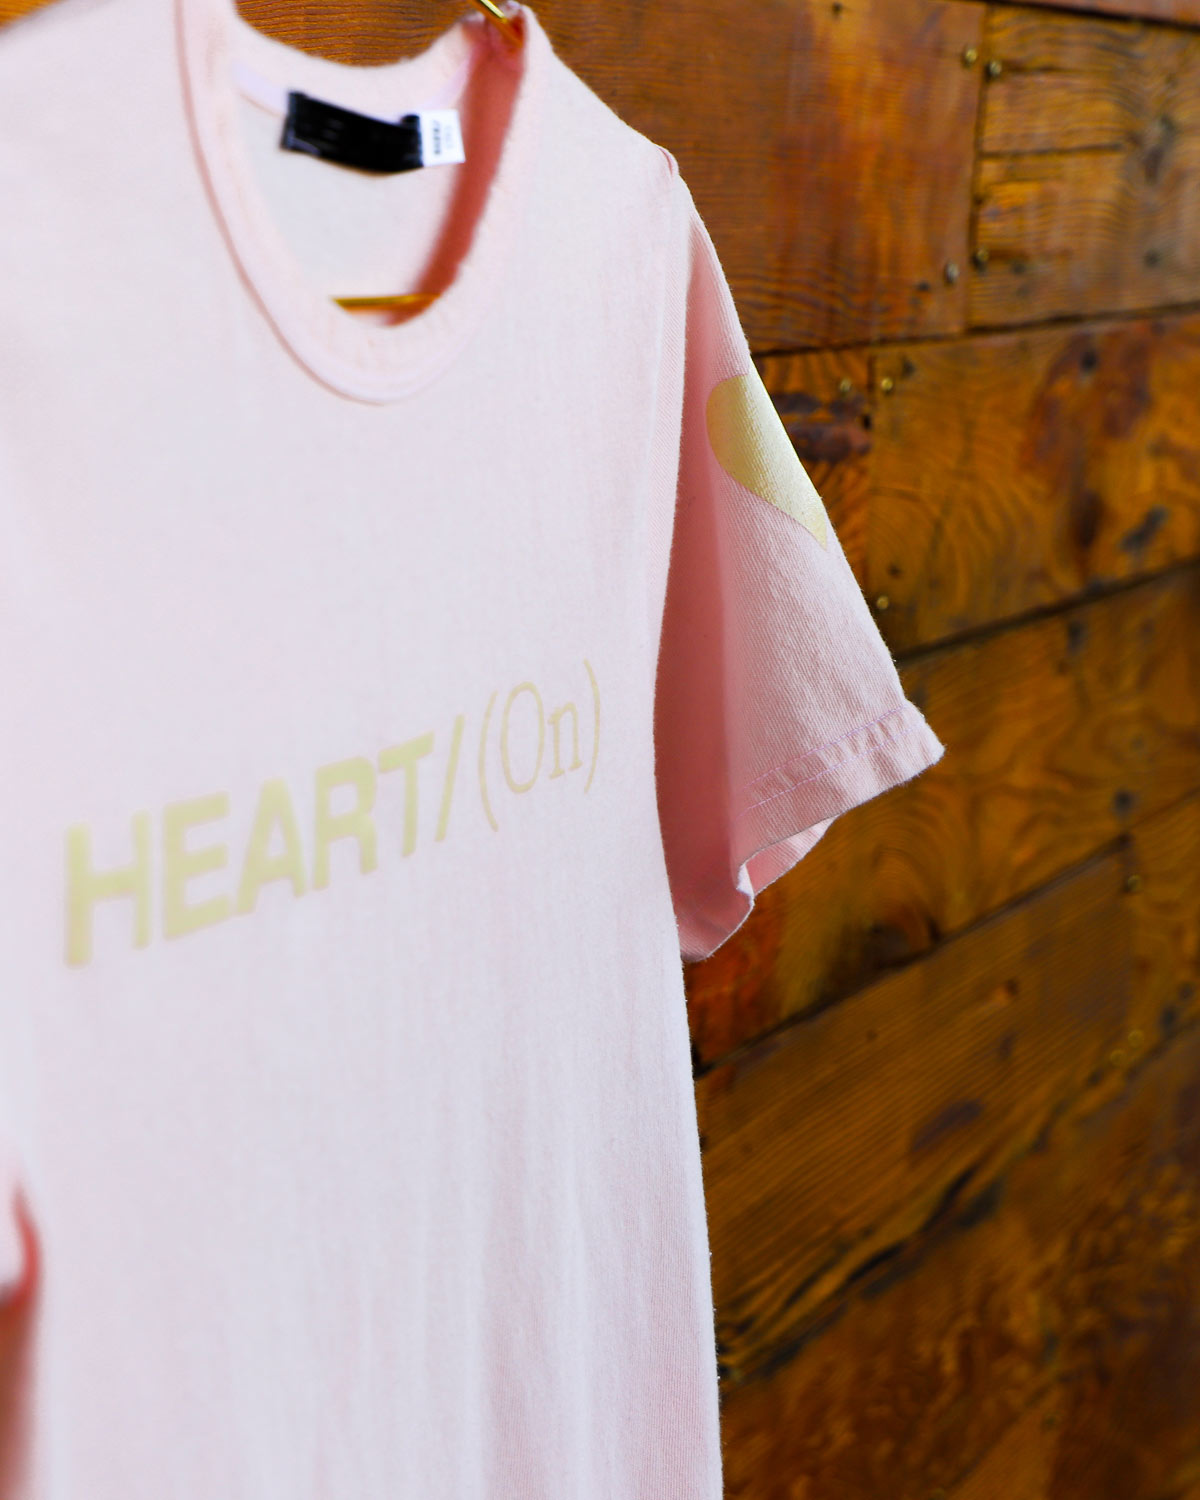 Light pink Heart On logo t-shirt hanging on wood wall